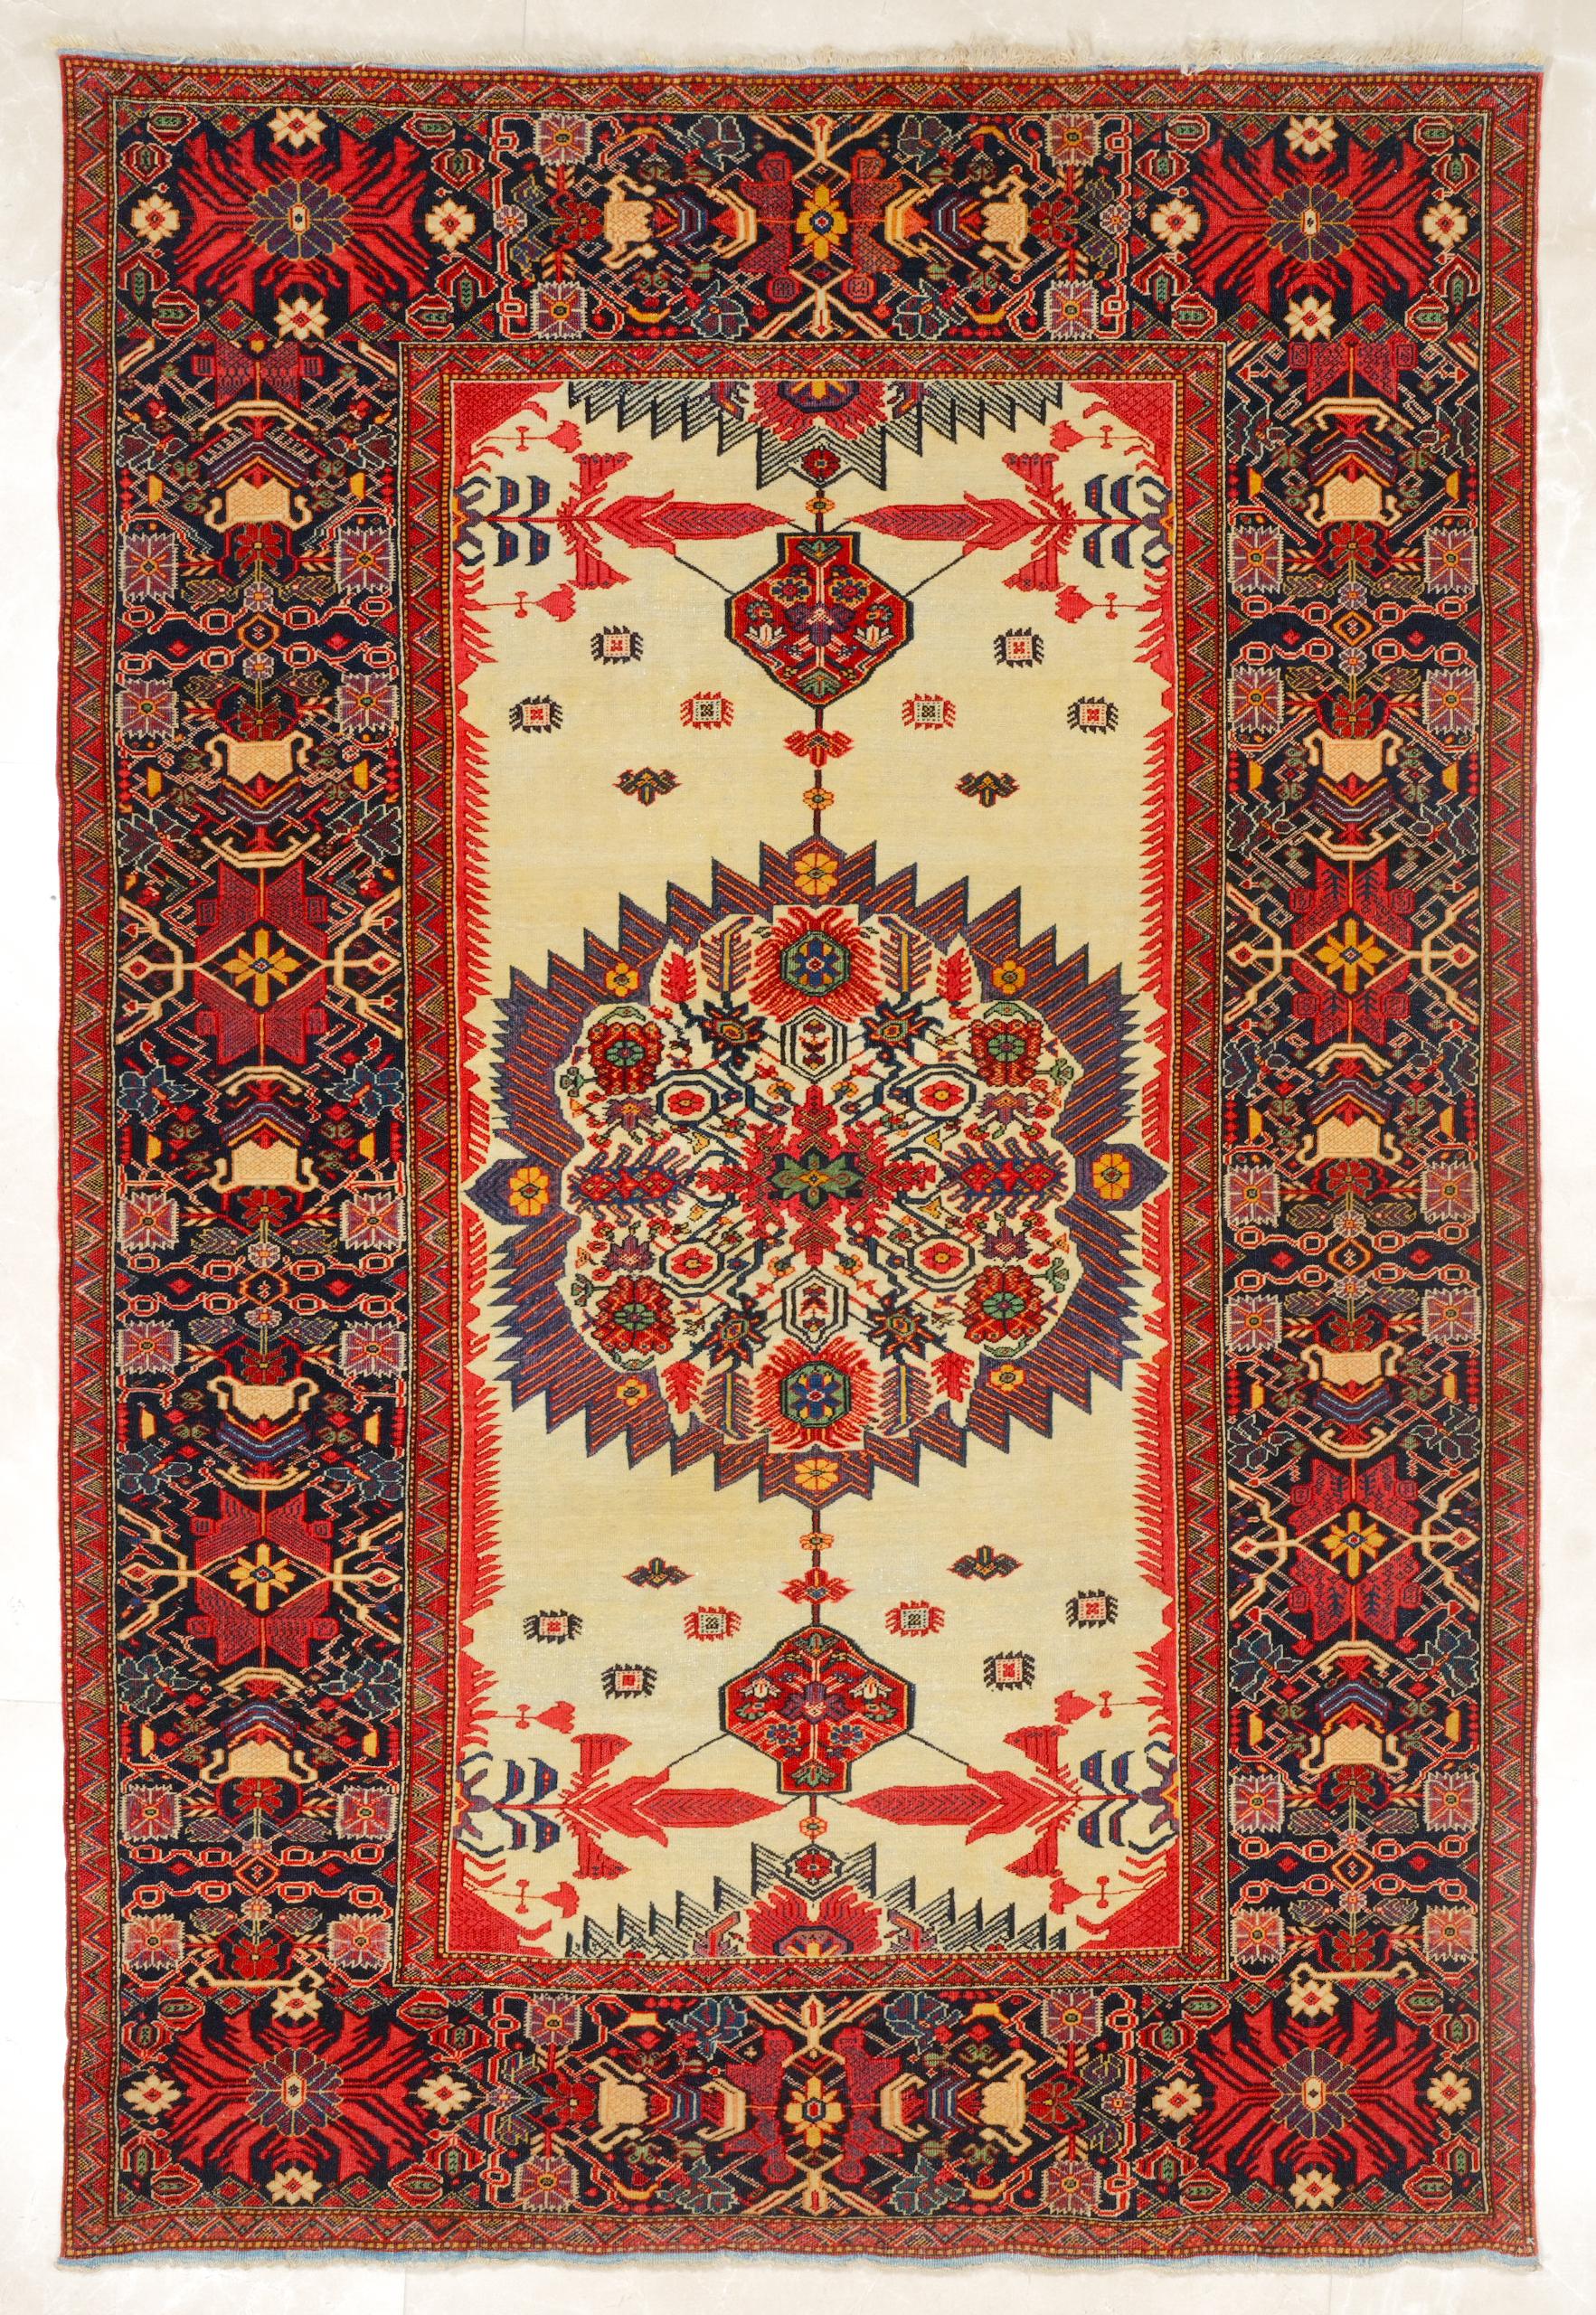 Late 19th Century Antique Farahan Sarouk Carpet - Late of 19th Century Sarouk Rug For Sale